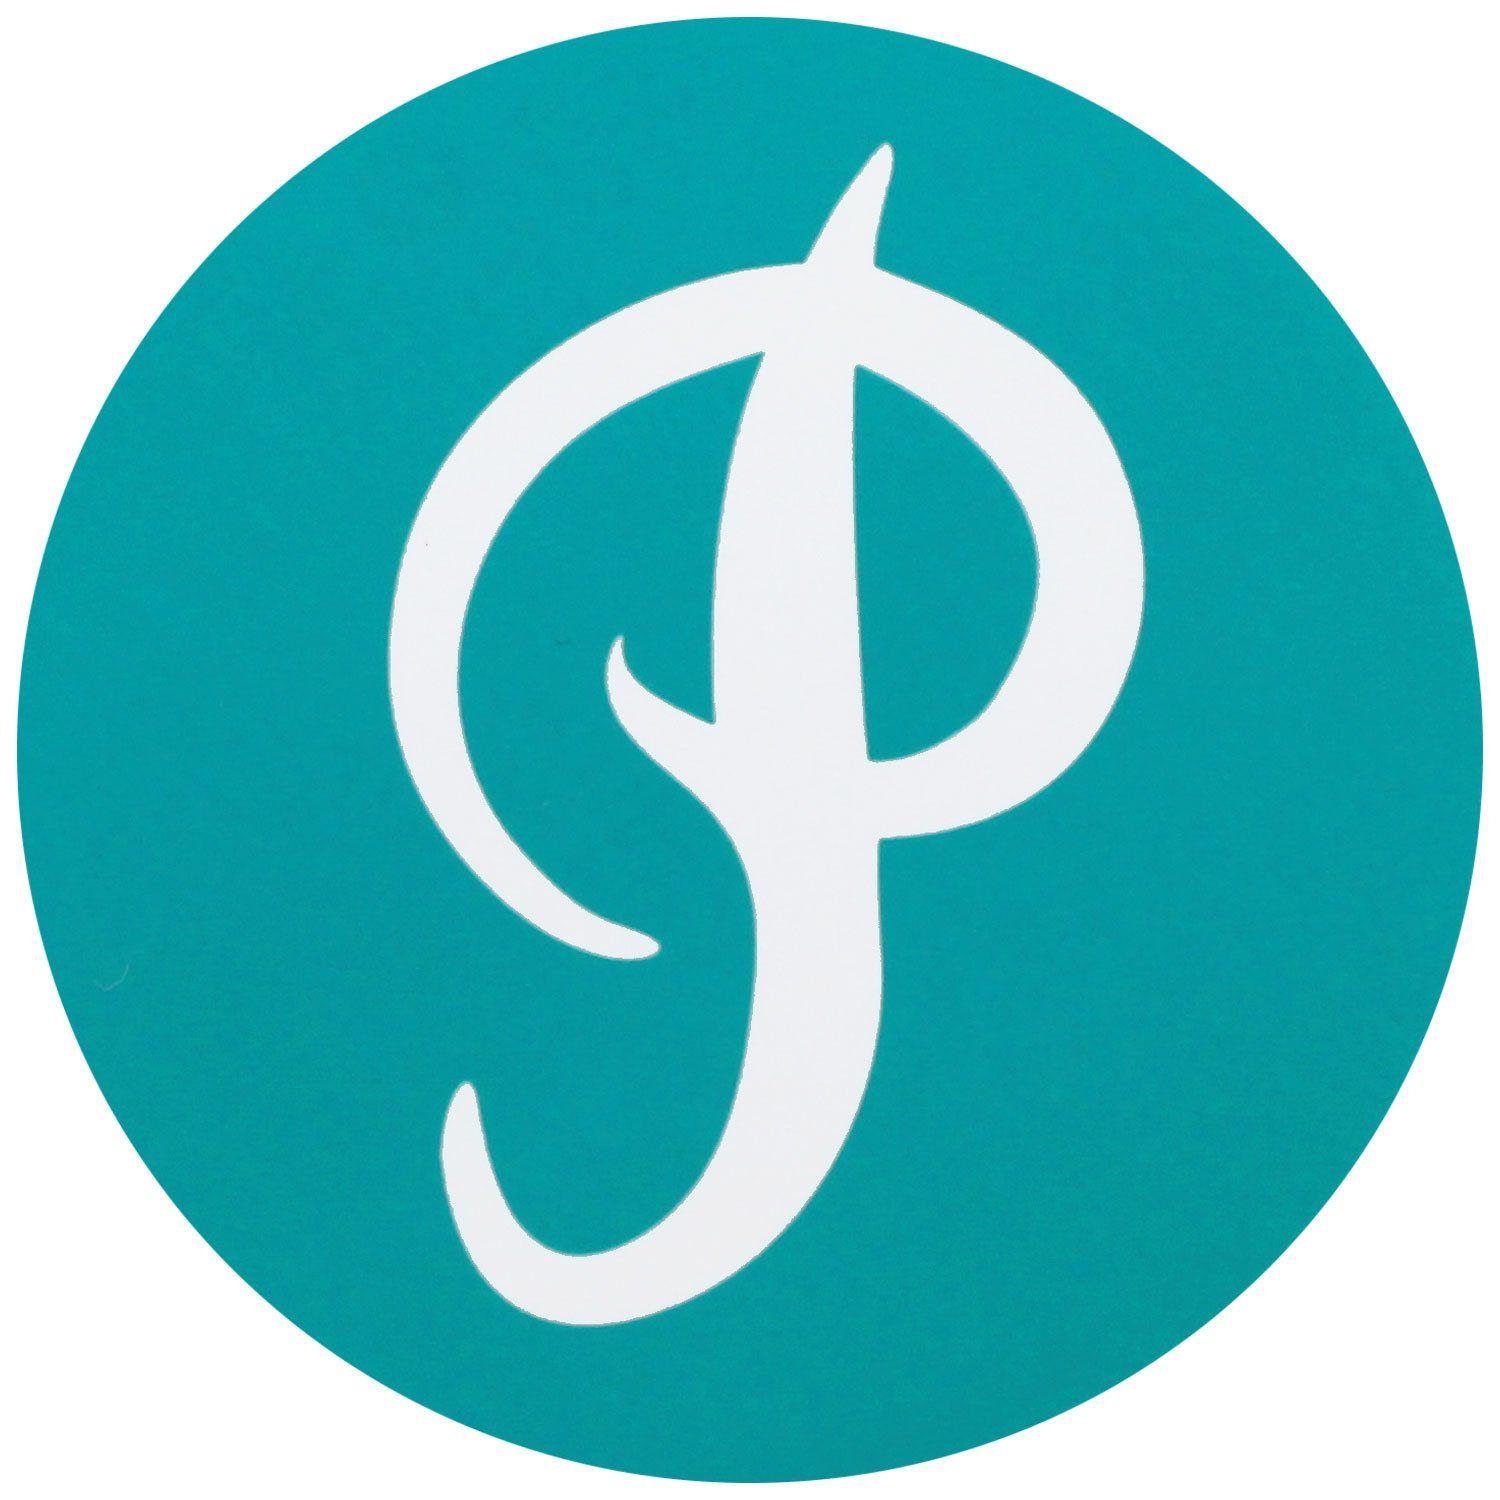 Primitive P Logo - Amazon.com: Primitive Skateboard Sticker P Logo Circle Blue 3 ...